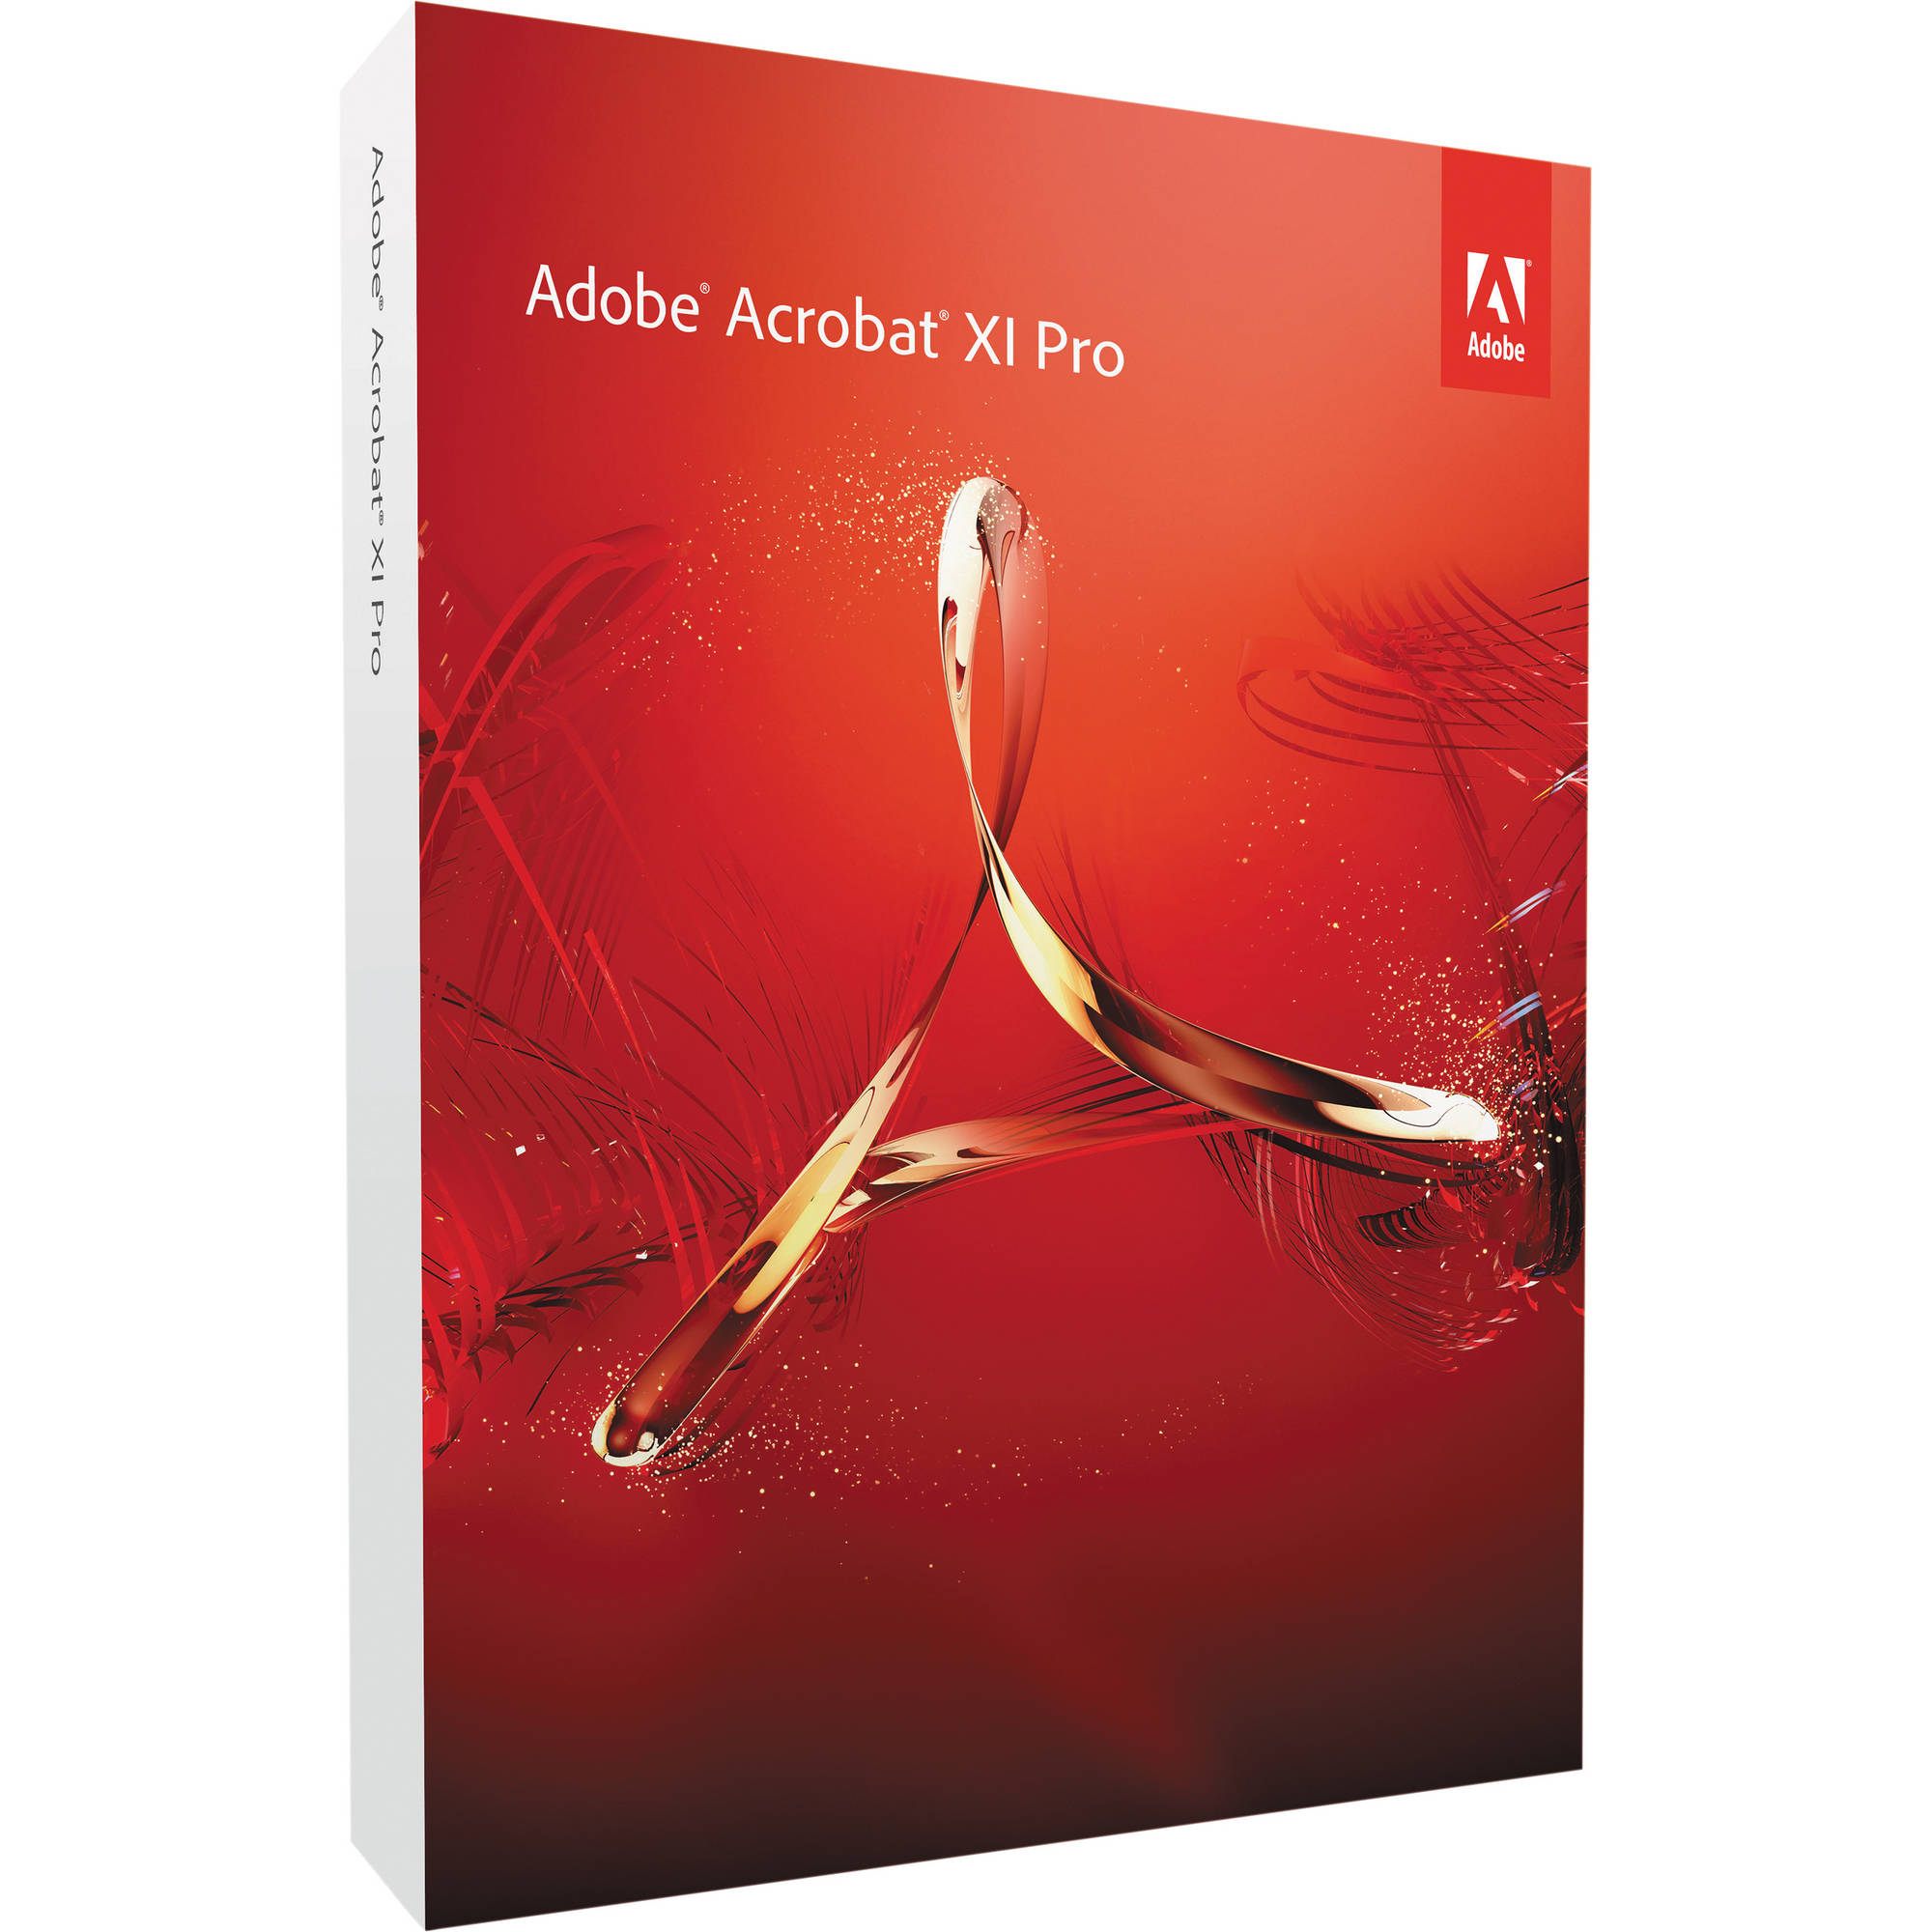 Adobe for mac